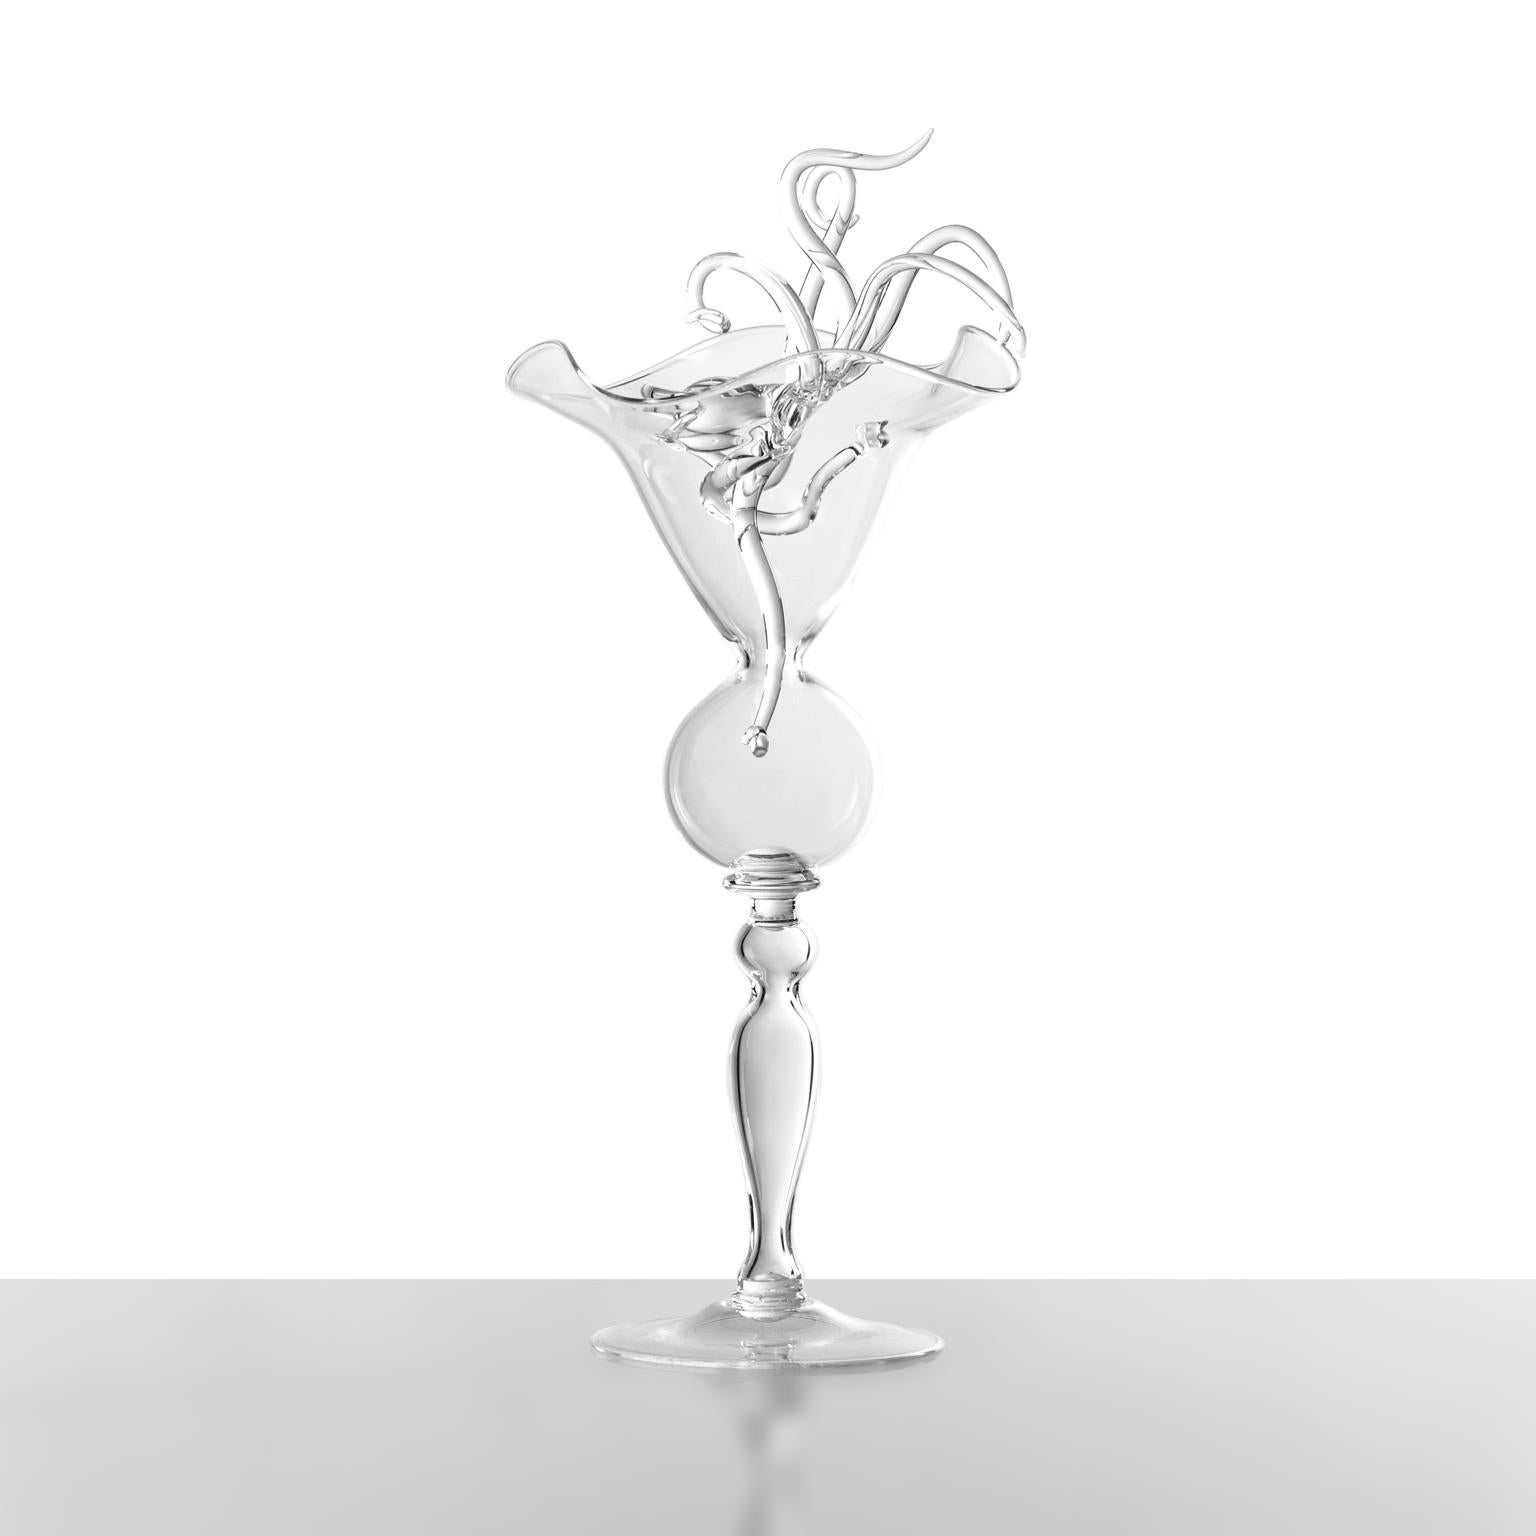 Italian Contemporary Leggerezza Hand-Blown Glass Sculptural Octopus Goblet #02 For Sale